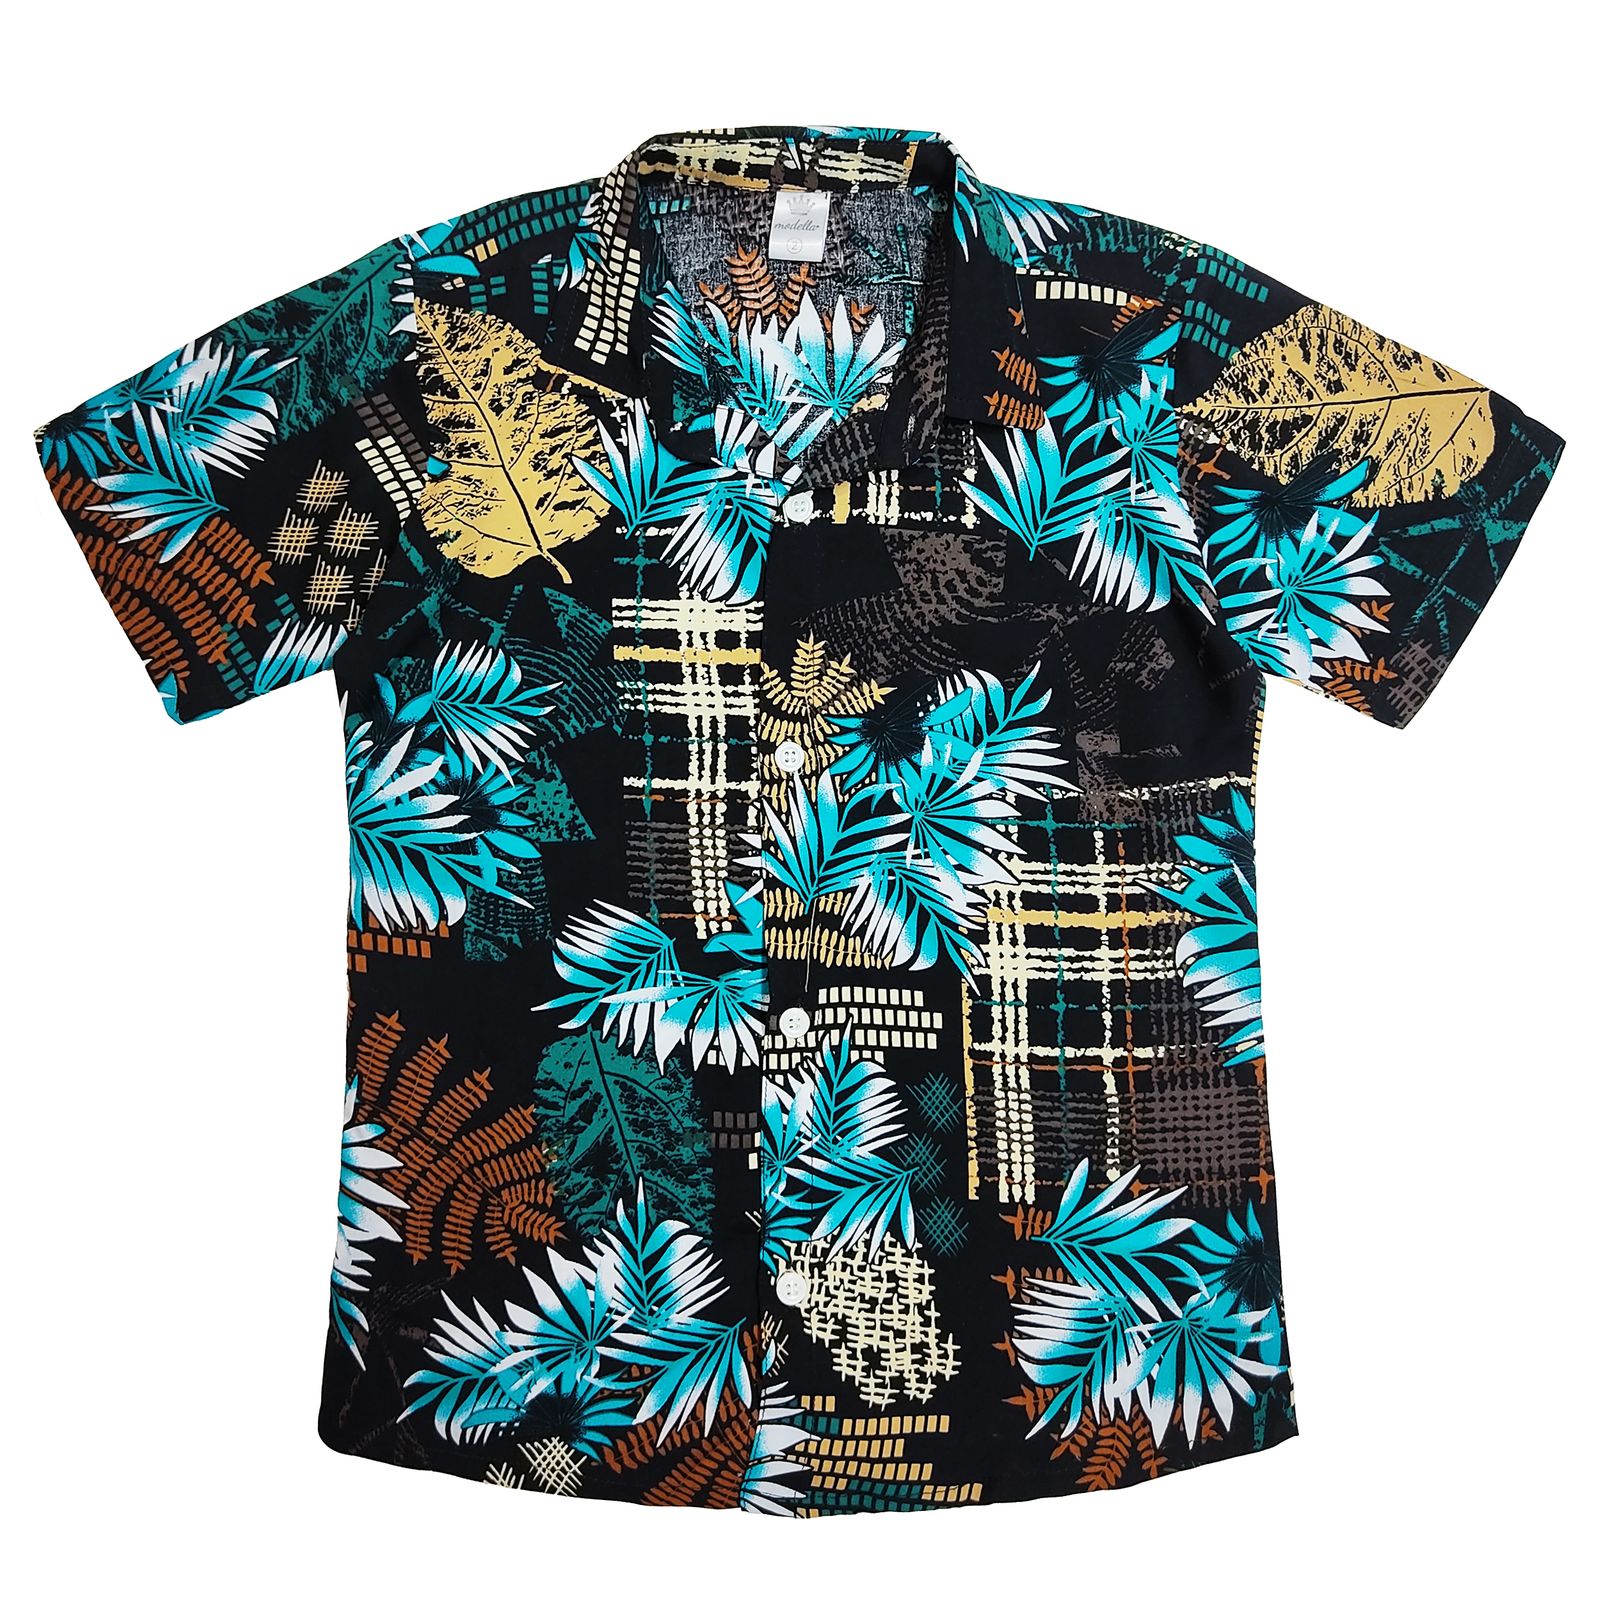 پیراهن پسرانه مدلا طرح هاوایی کد KAM 2022 -  - 1